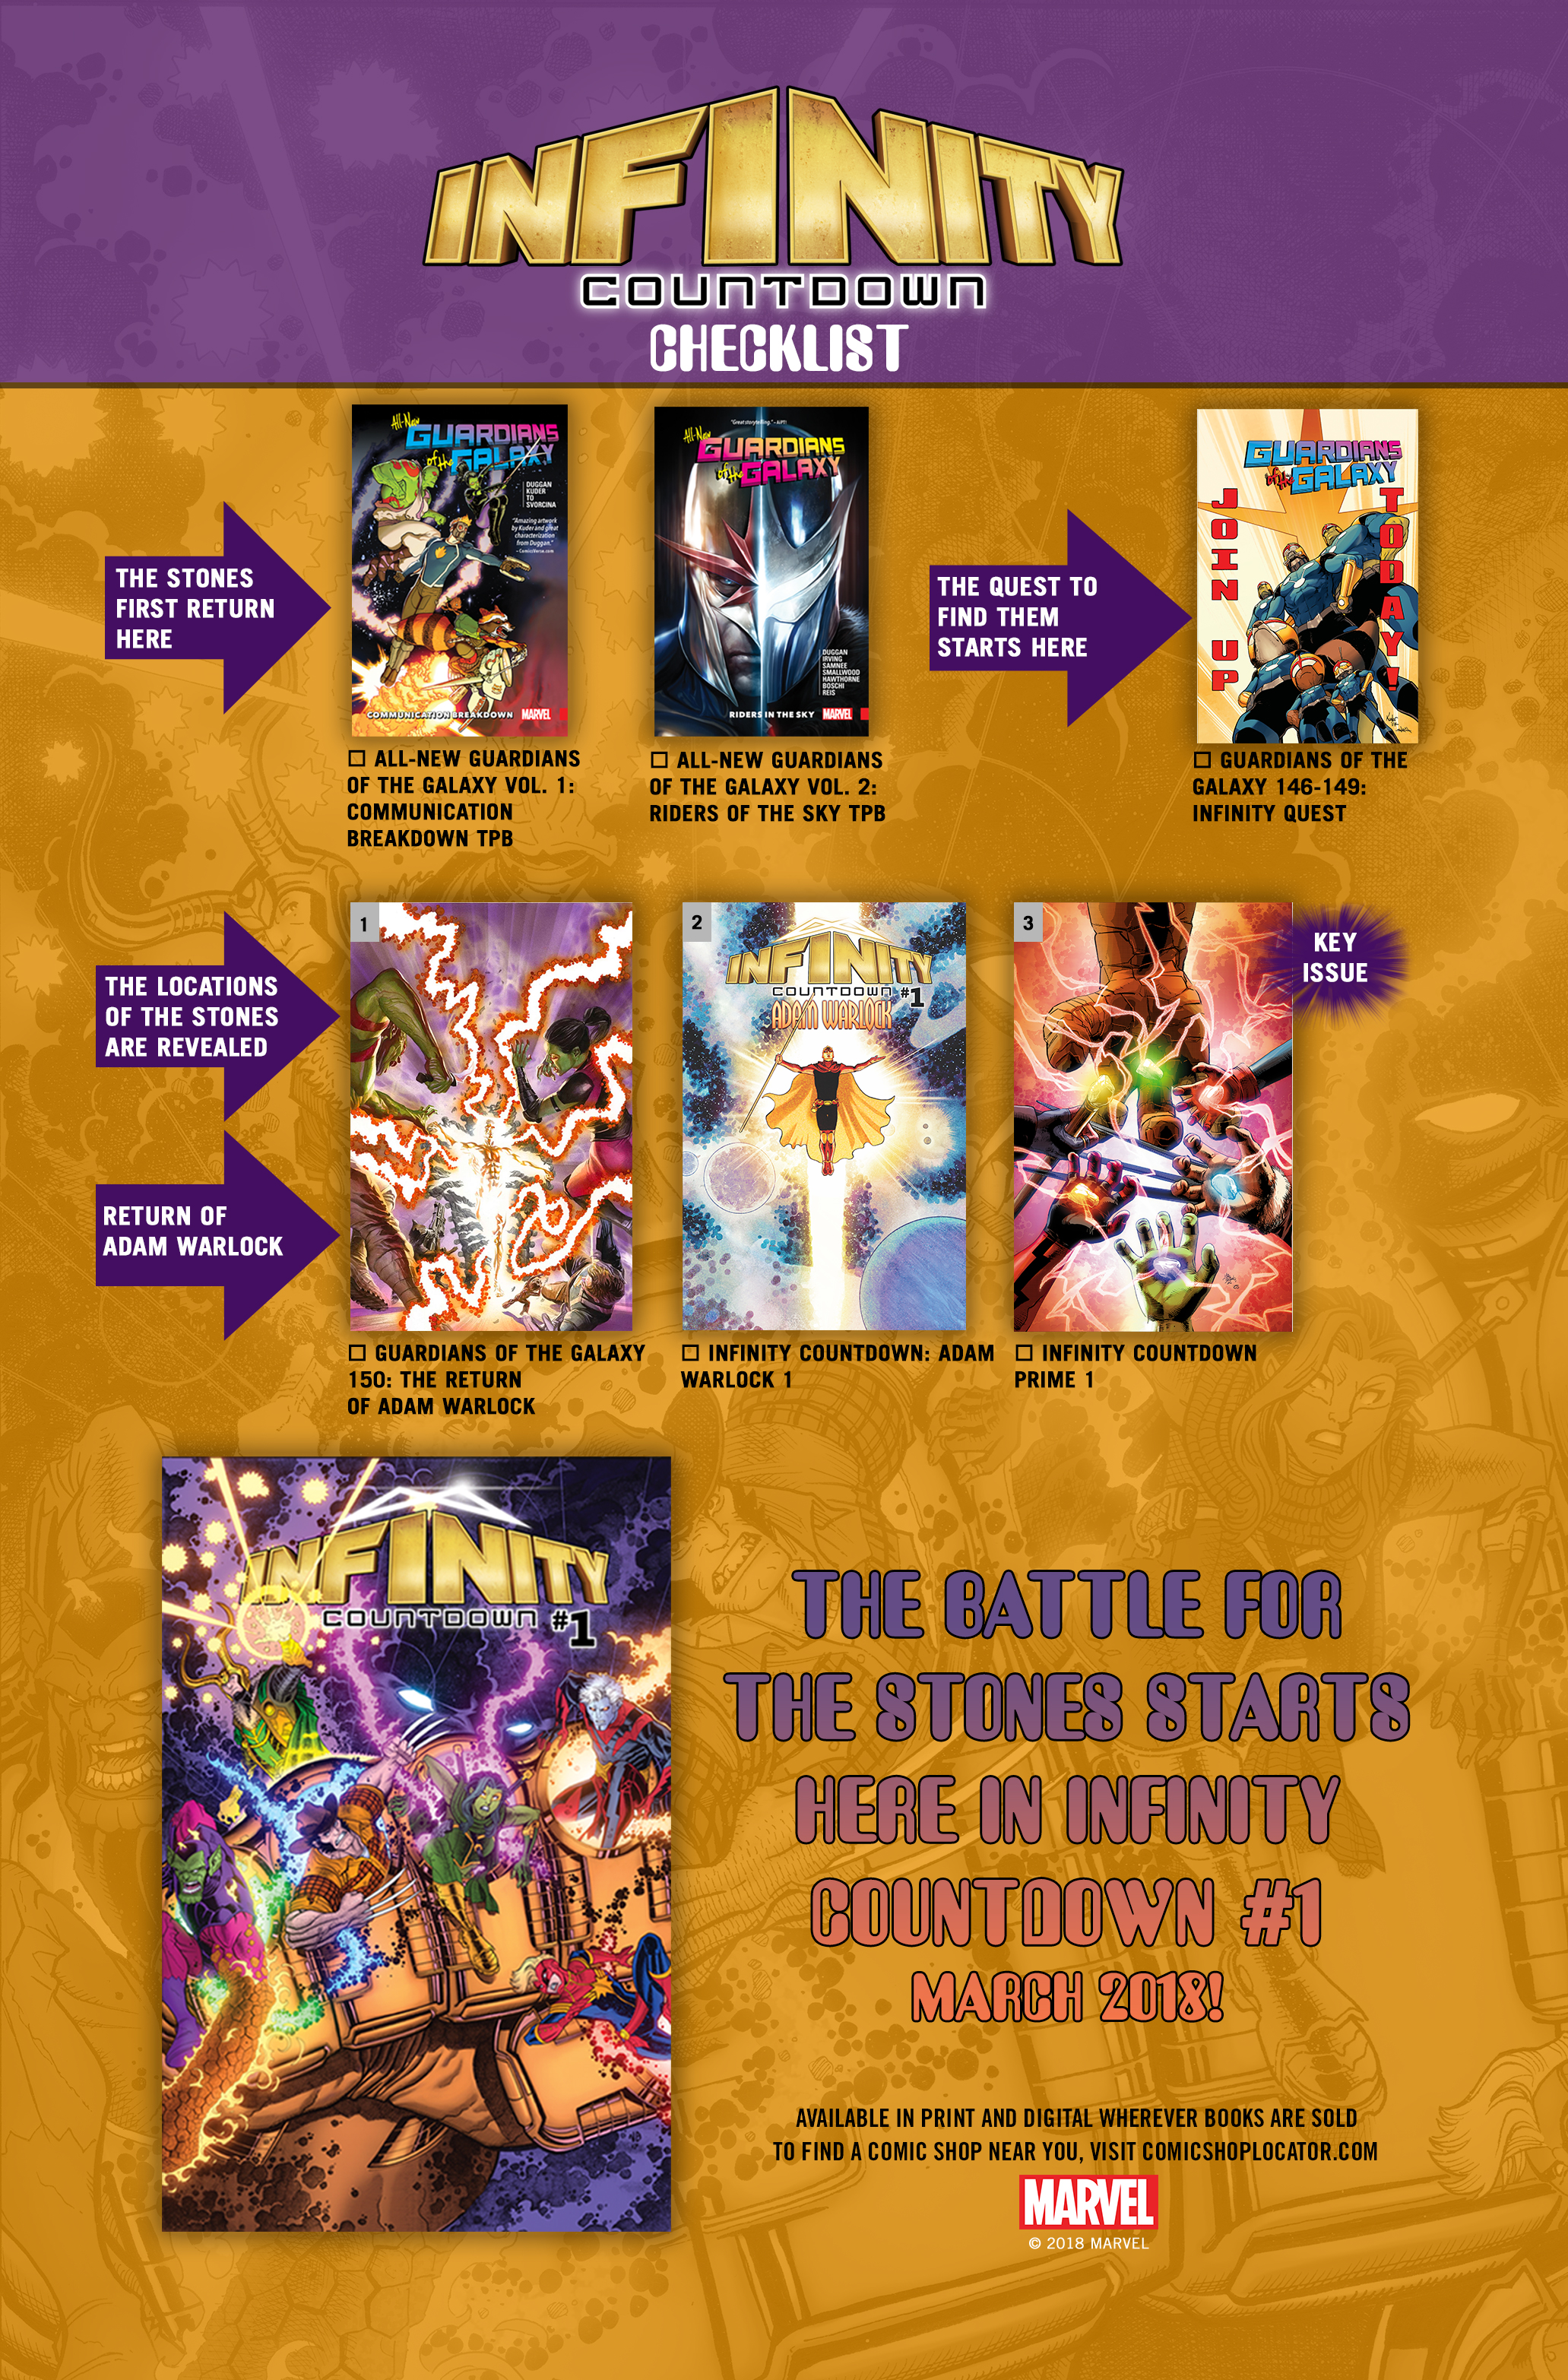 Marvel Comics Infinity Countdown checklist is out | BrutalGamer 